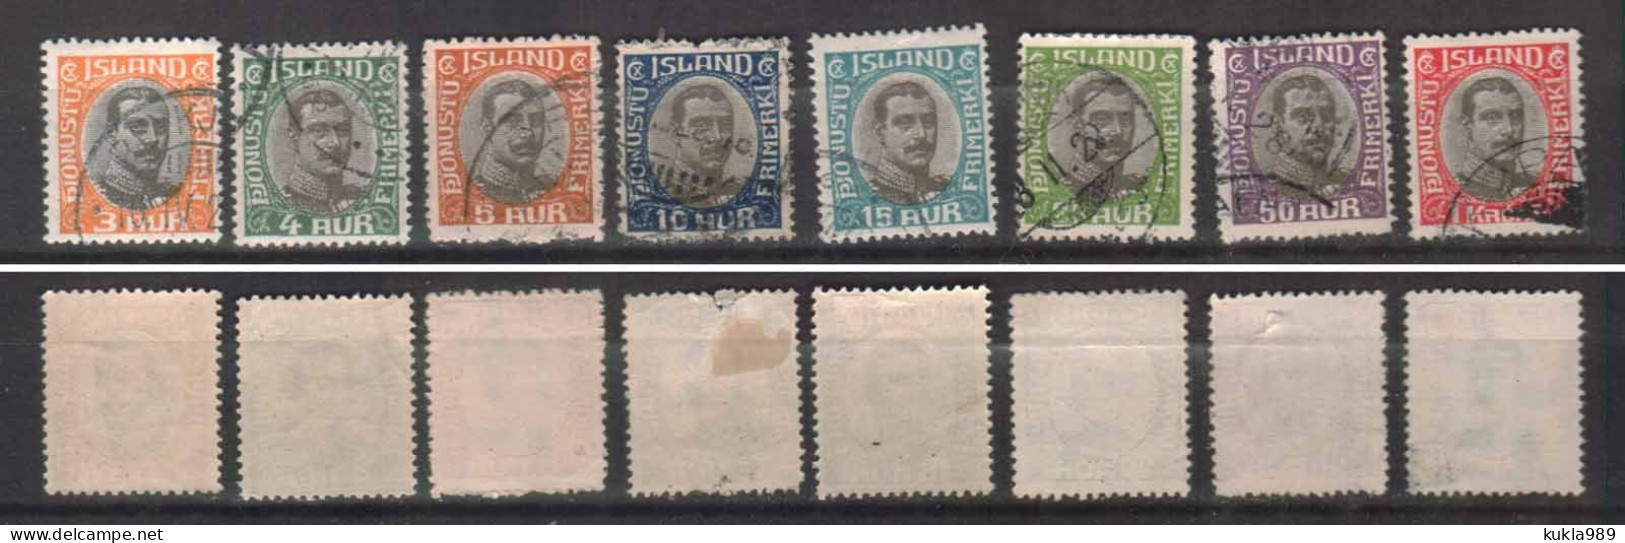 ICELAND STAMPS 1920, Sc.#O40-O47., ORIG. GUM., CTO - Unused Stamps